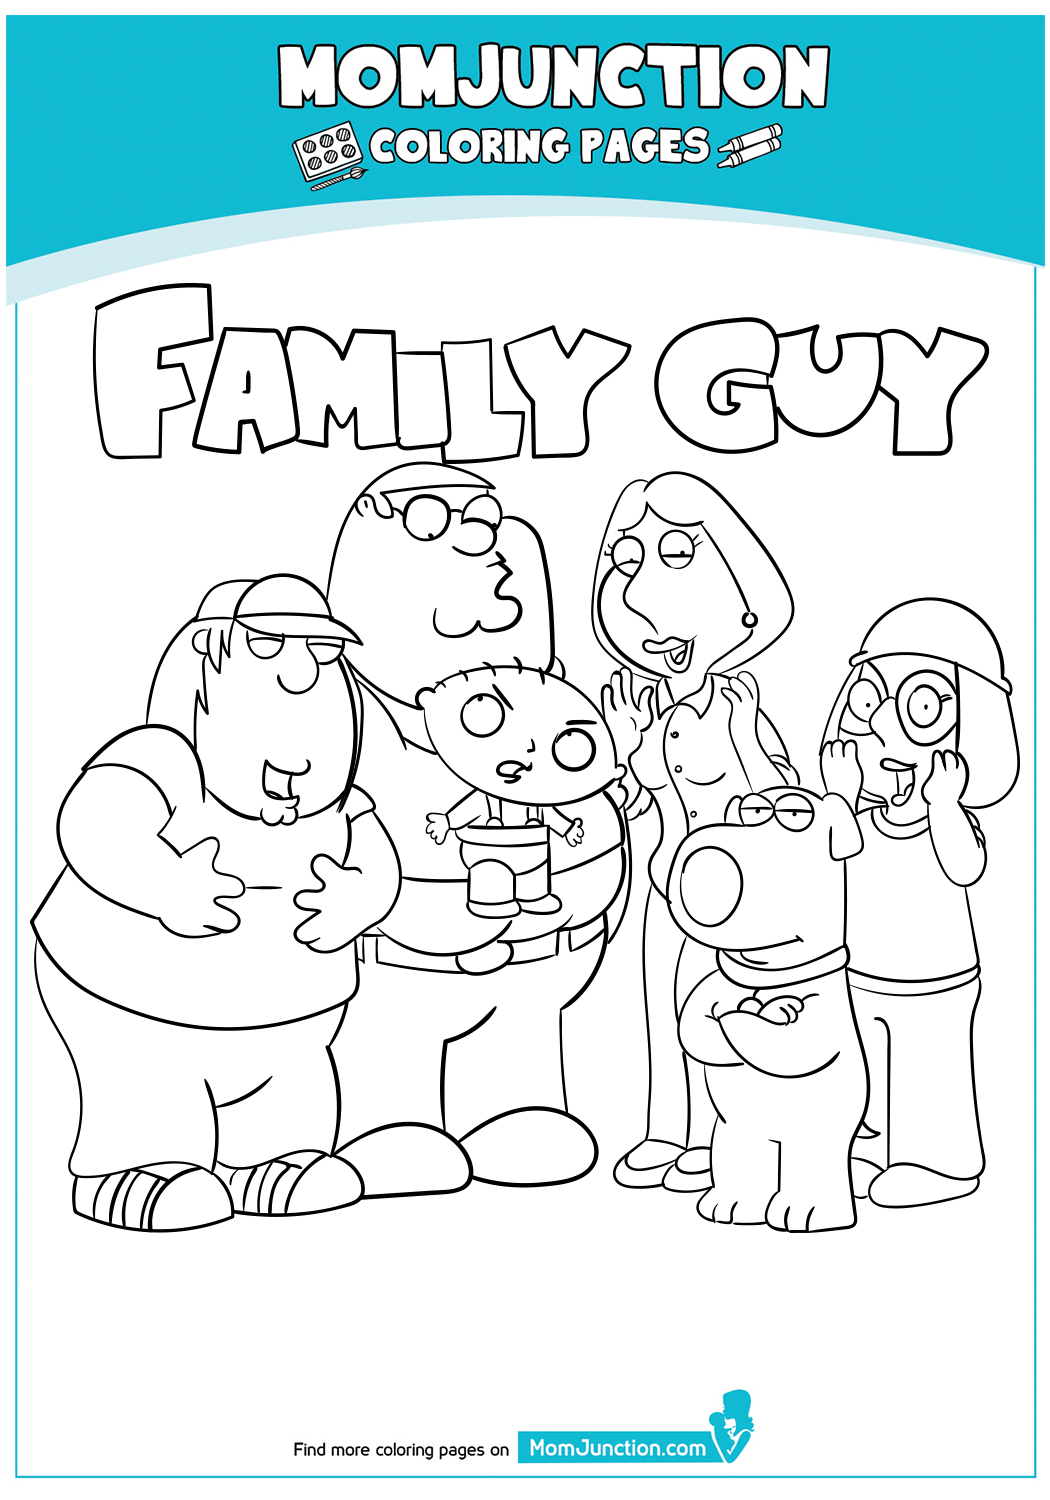 The-Family-Guy